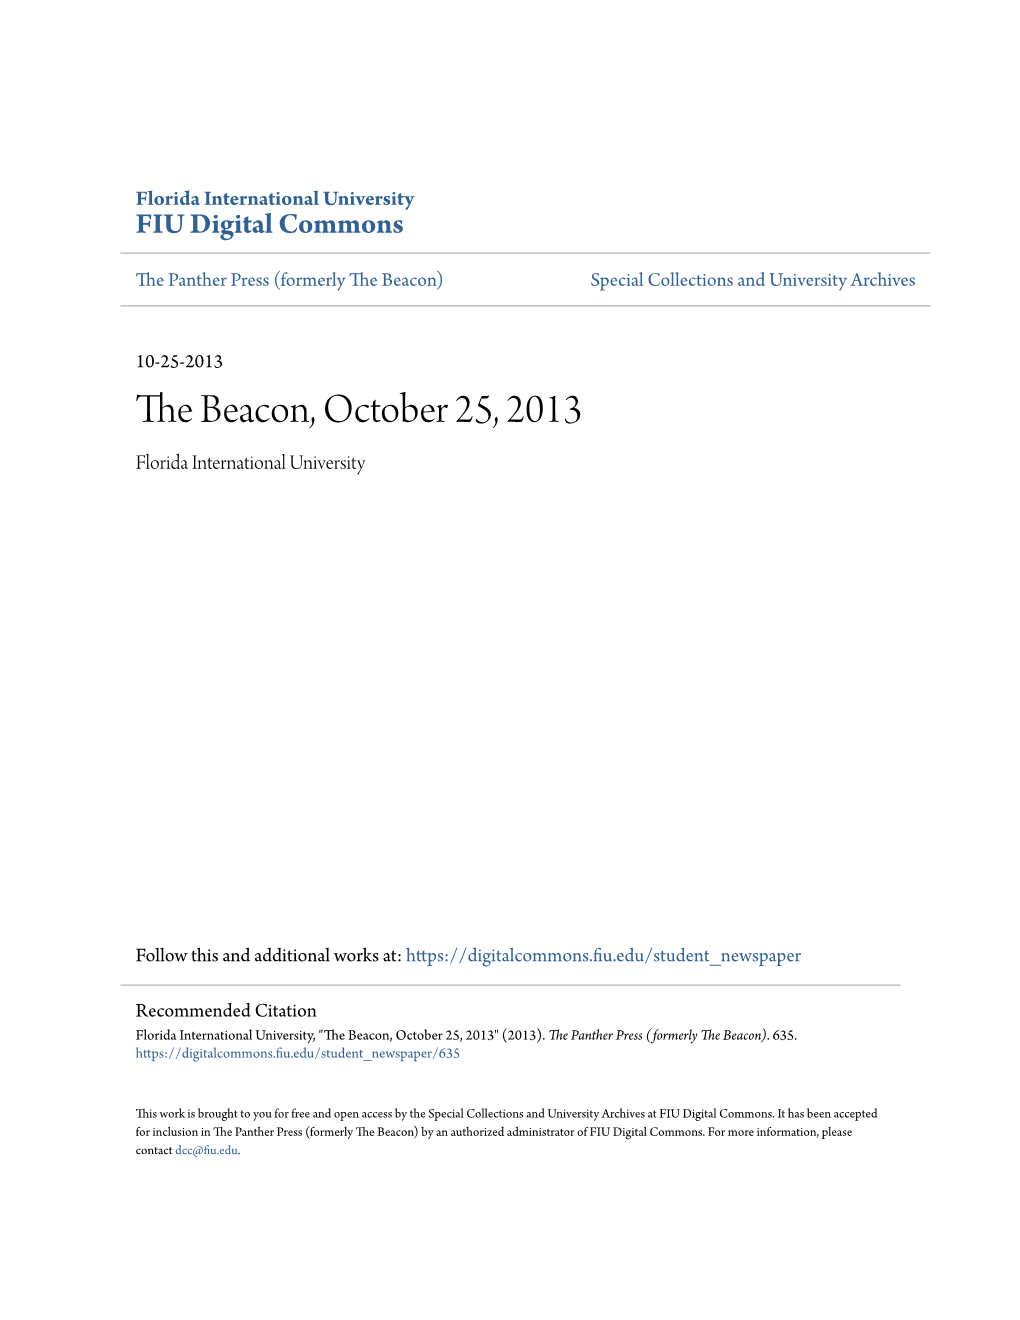 The Beacon, October 25, 2013 Florida International University